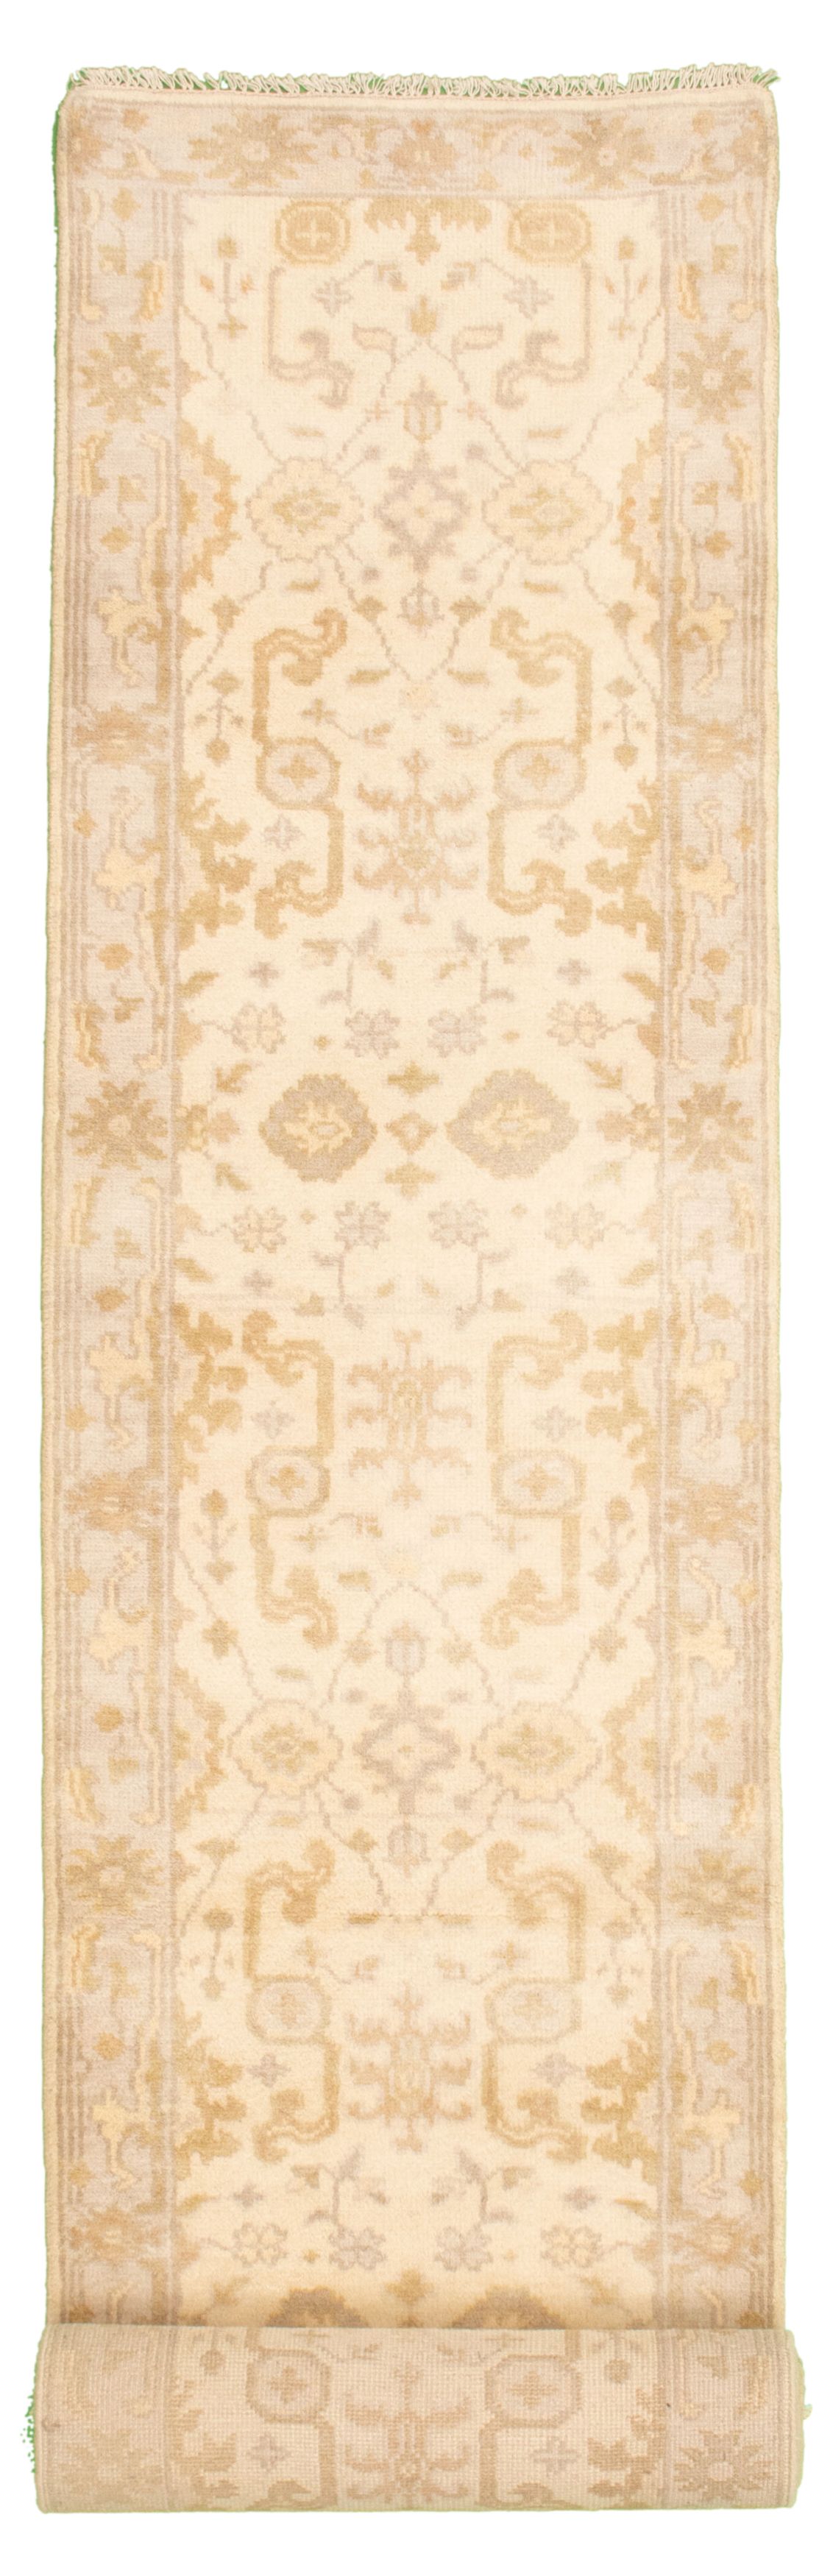 Hand-knotted Royal Ushak Cream Wool Rug 2'8" x 15'9"  Size: 2'8" x 15'9"  